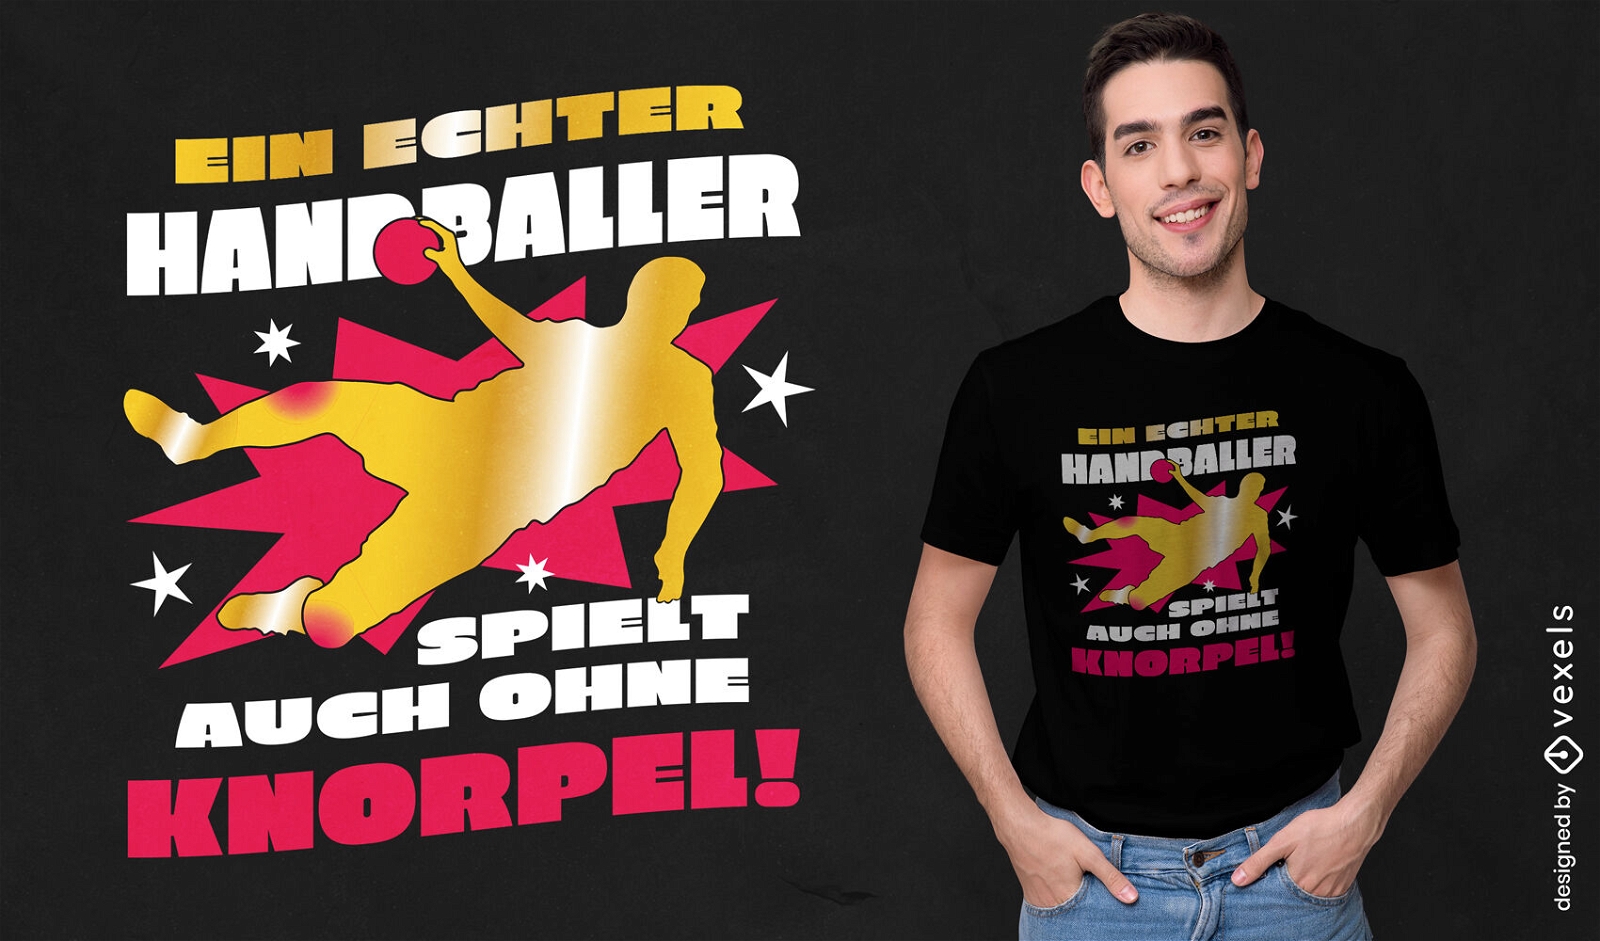 Handball player t-shirt silhouette design